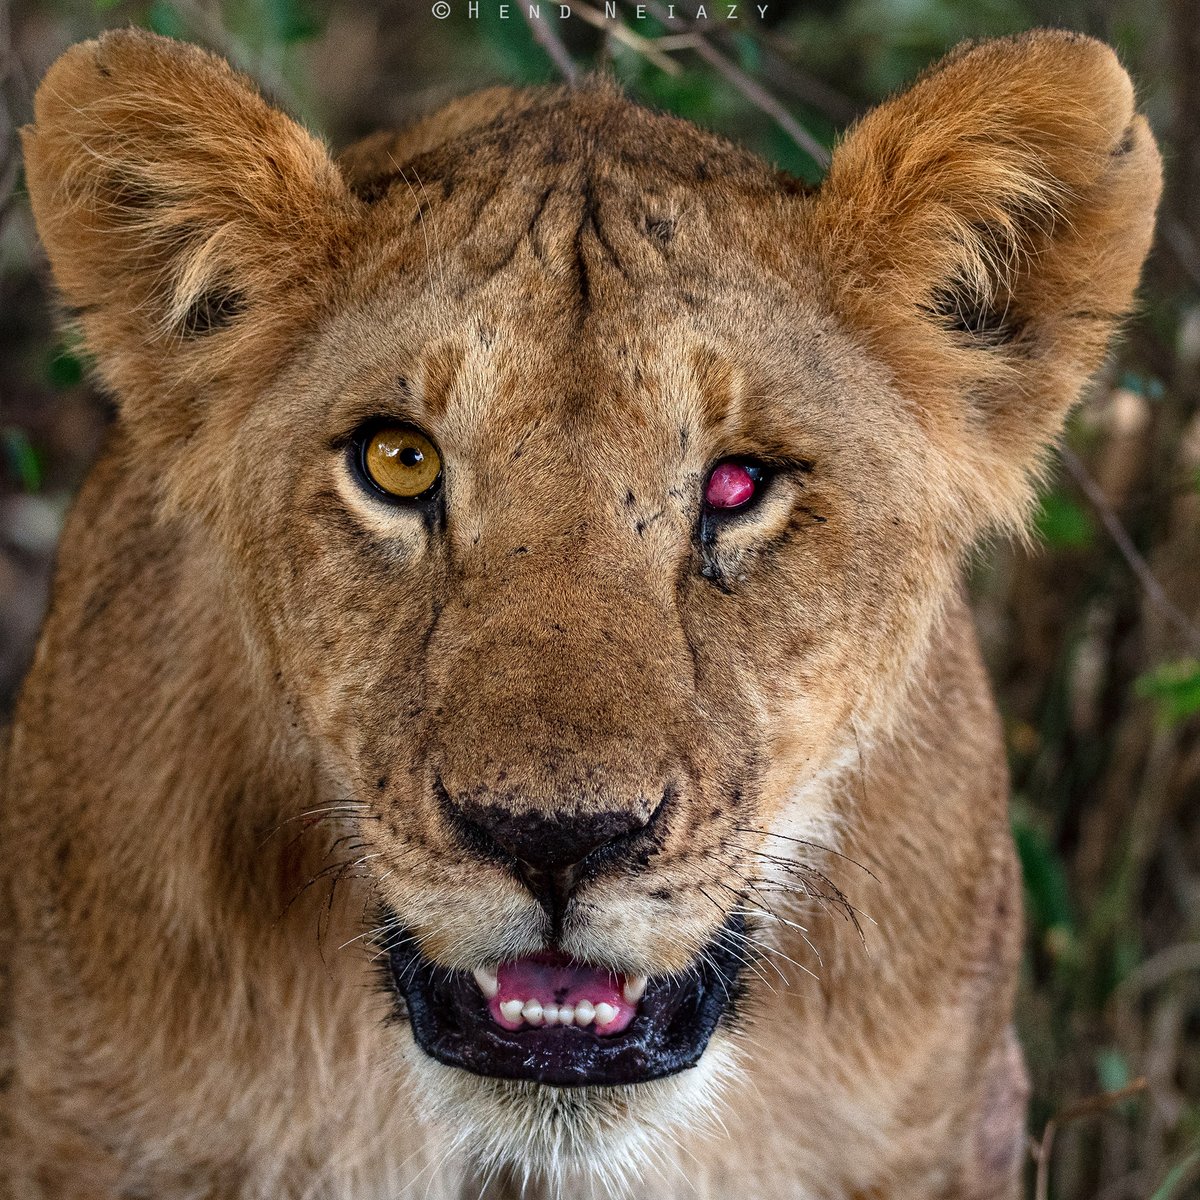 survivor 🦁🐾
masai mara national reserve - Kenya

#masaimara #kenya #wildlife #wildlifephotography #lionking #lion #lionsofmasaimara #nikonmea #nikonkenya #naturelover #wild #natgeomagarab #NatGeoWild #natgeoyourshot